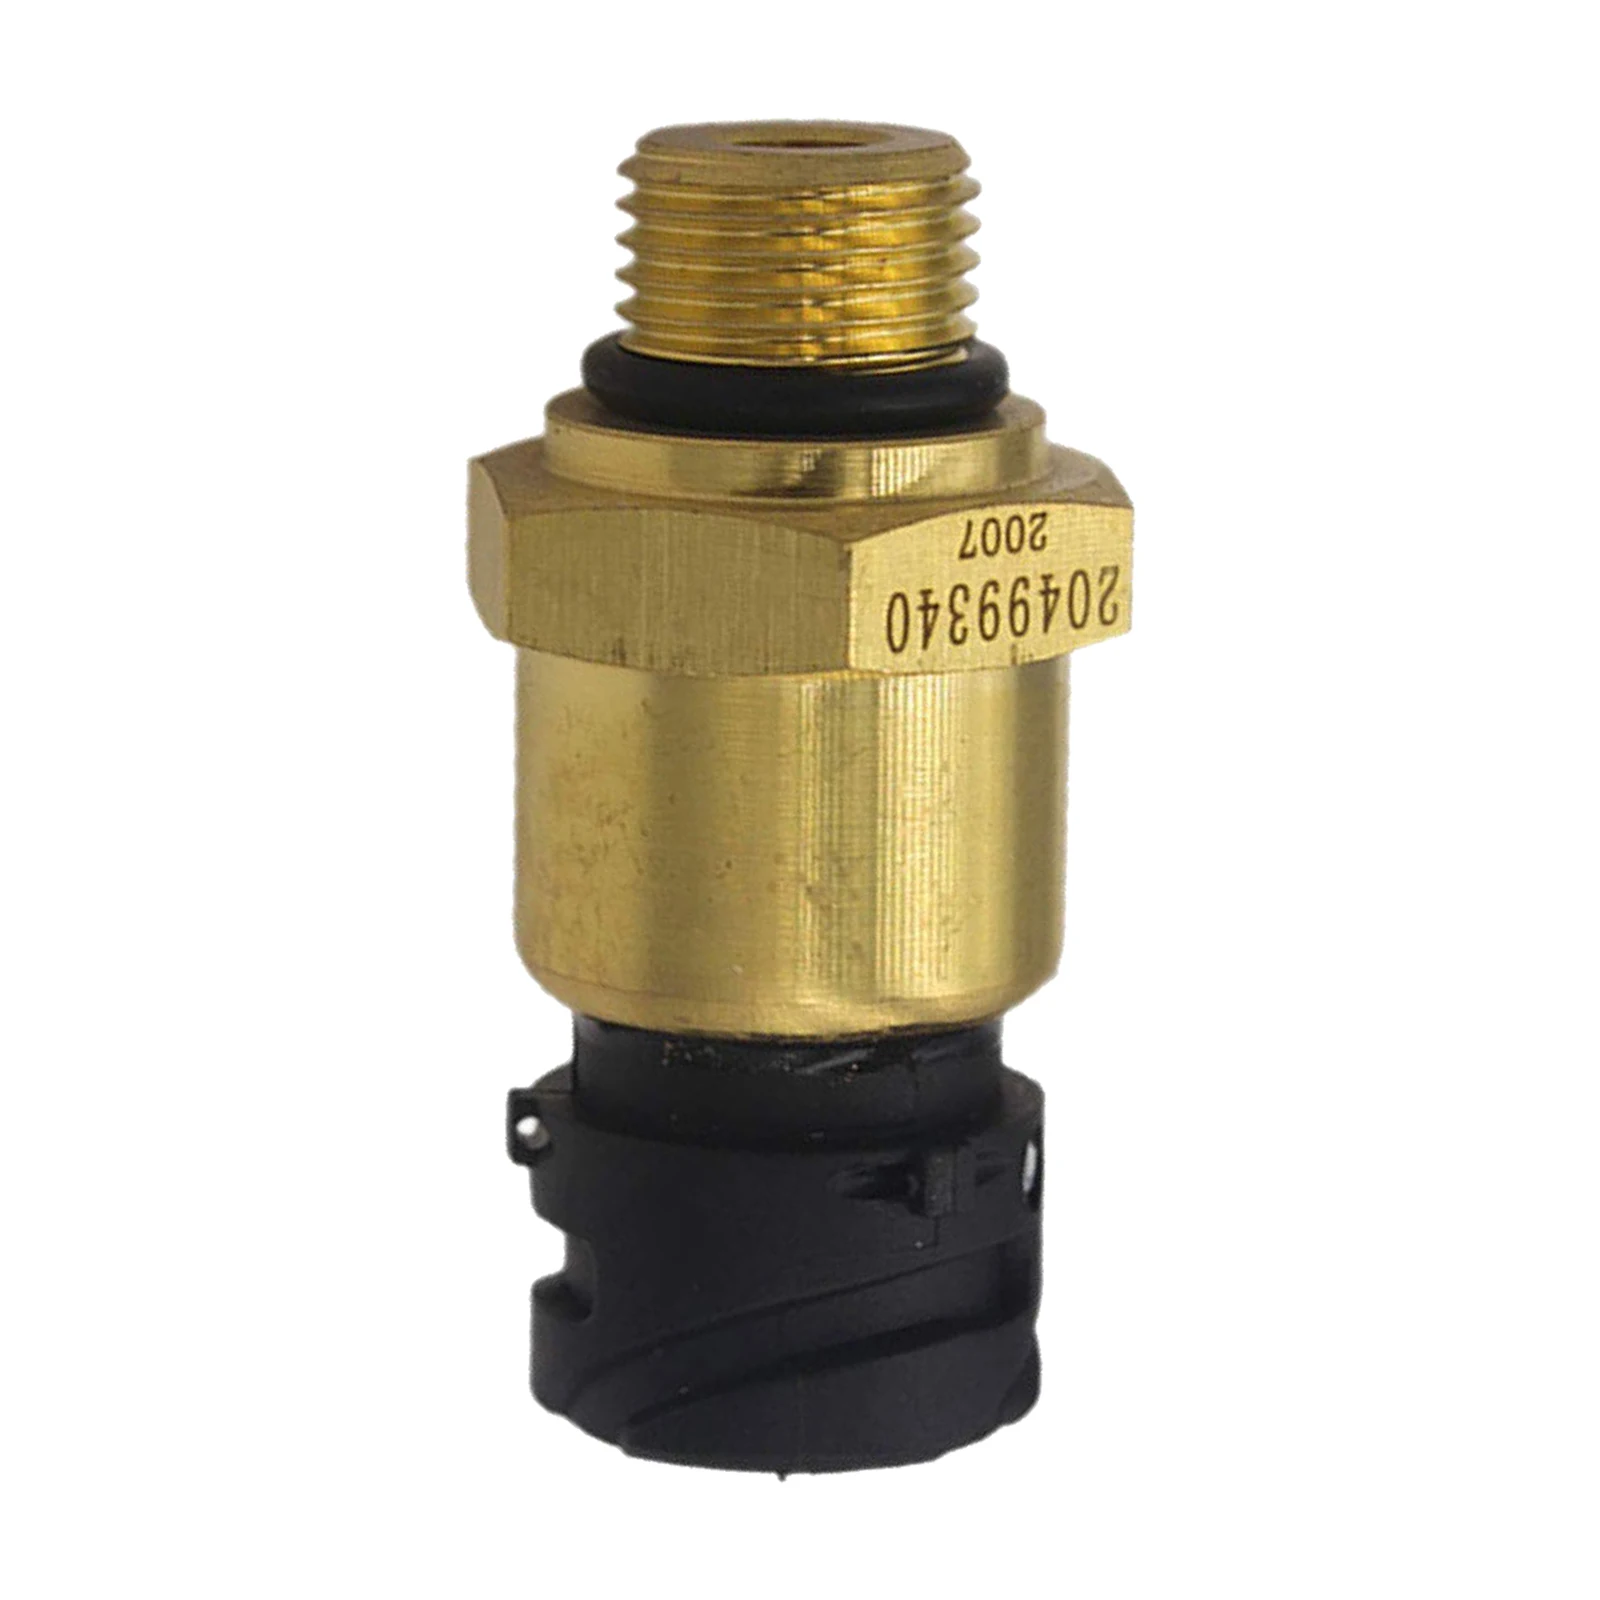 Automotive Oil Pressure Sensor Parts 20484676 00420796744 7421746206 Replacement Engine Crankcase Pressure Switch Fit for Volvo